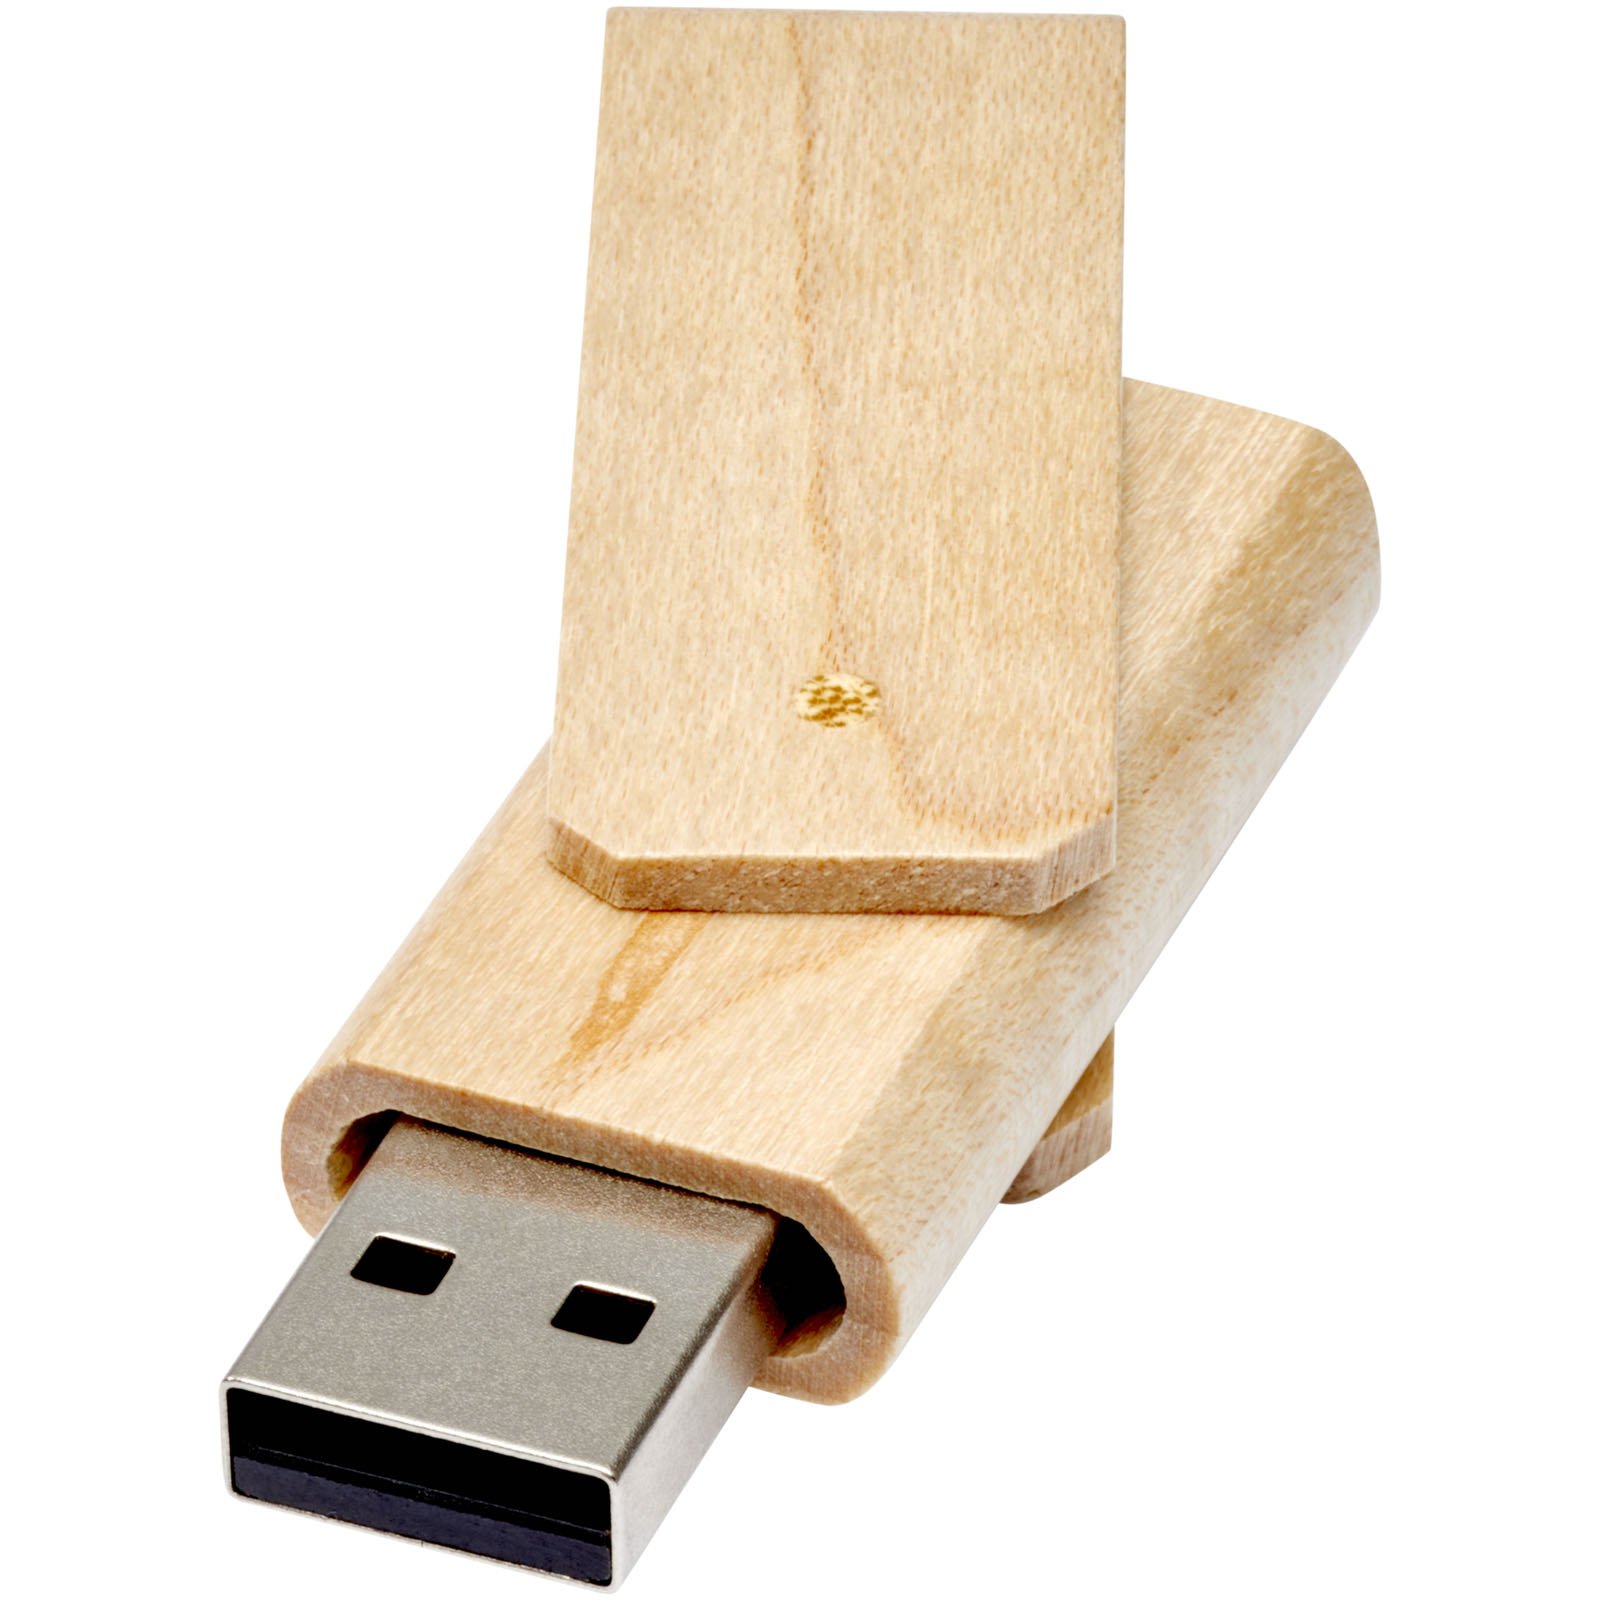 Holz USB Stick - Belton